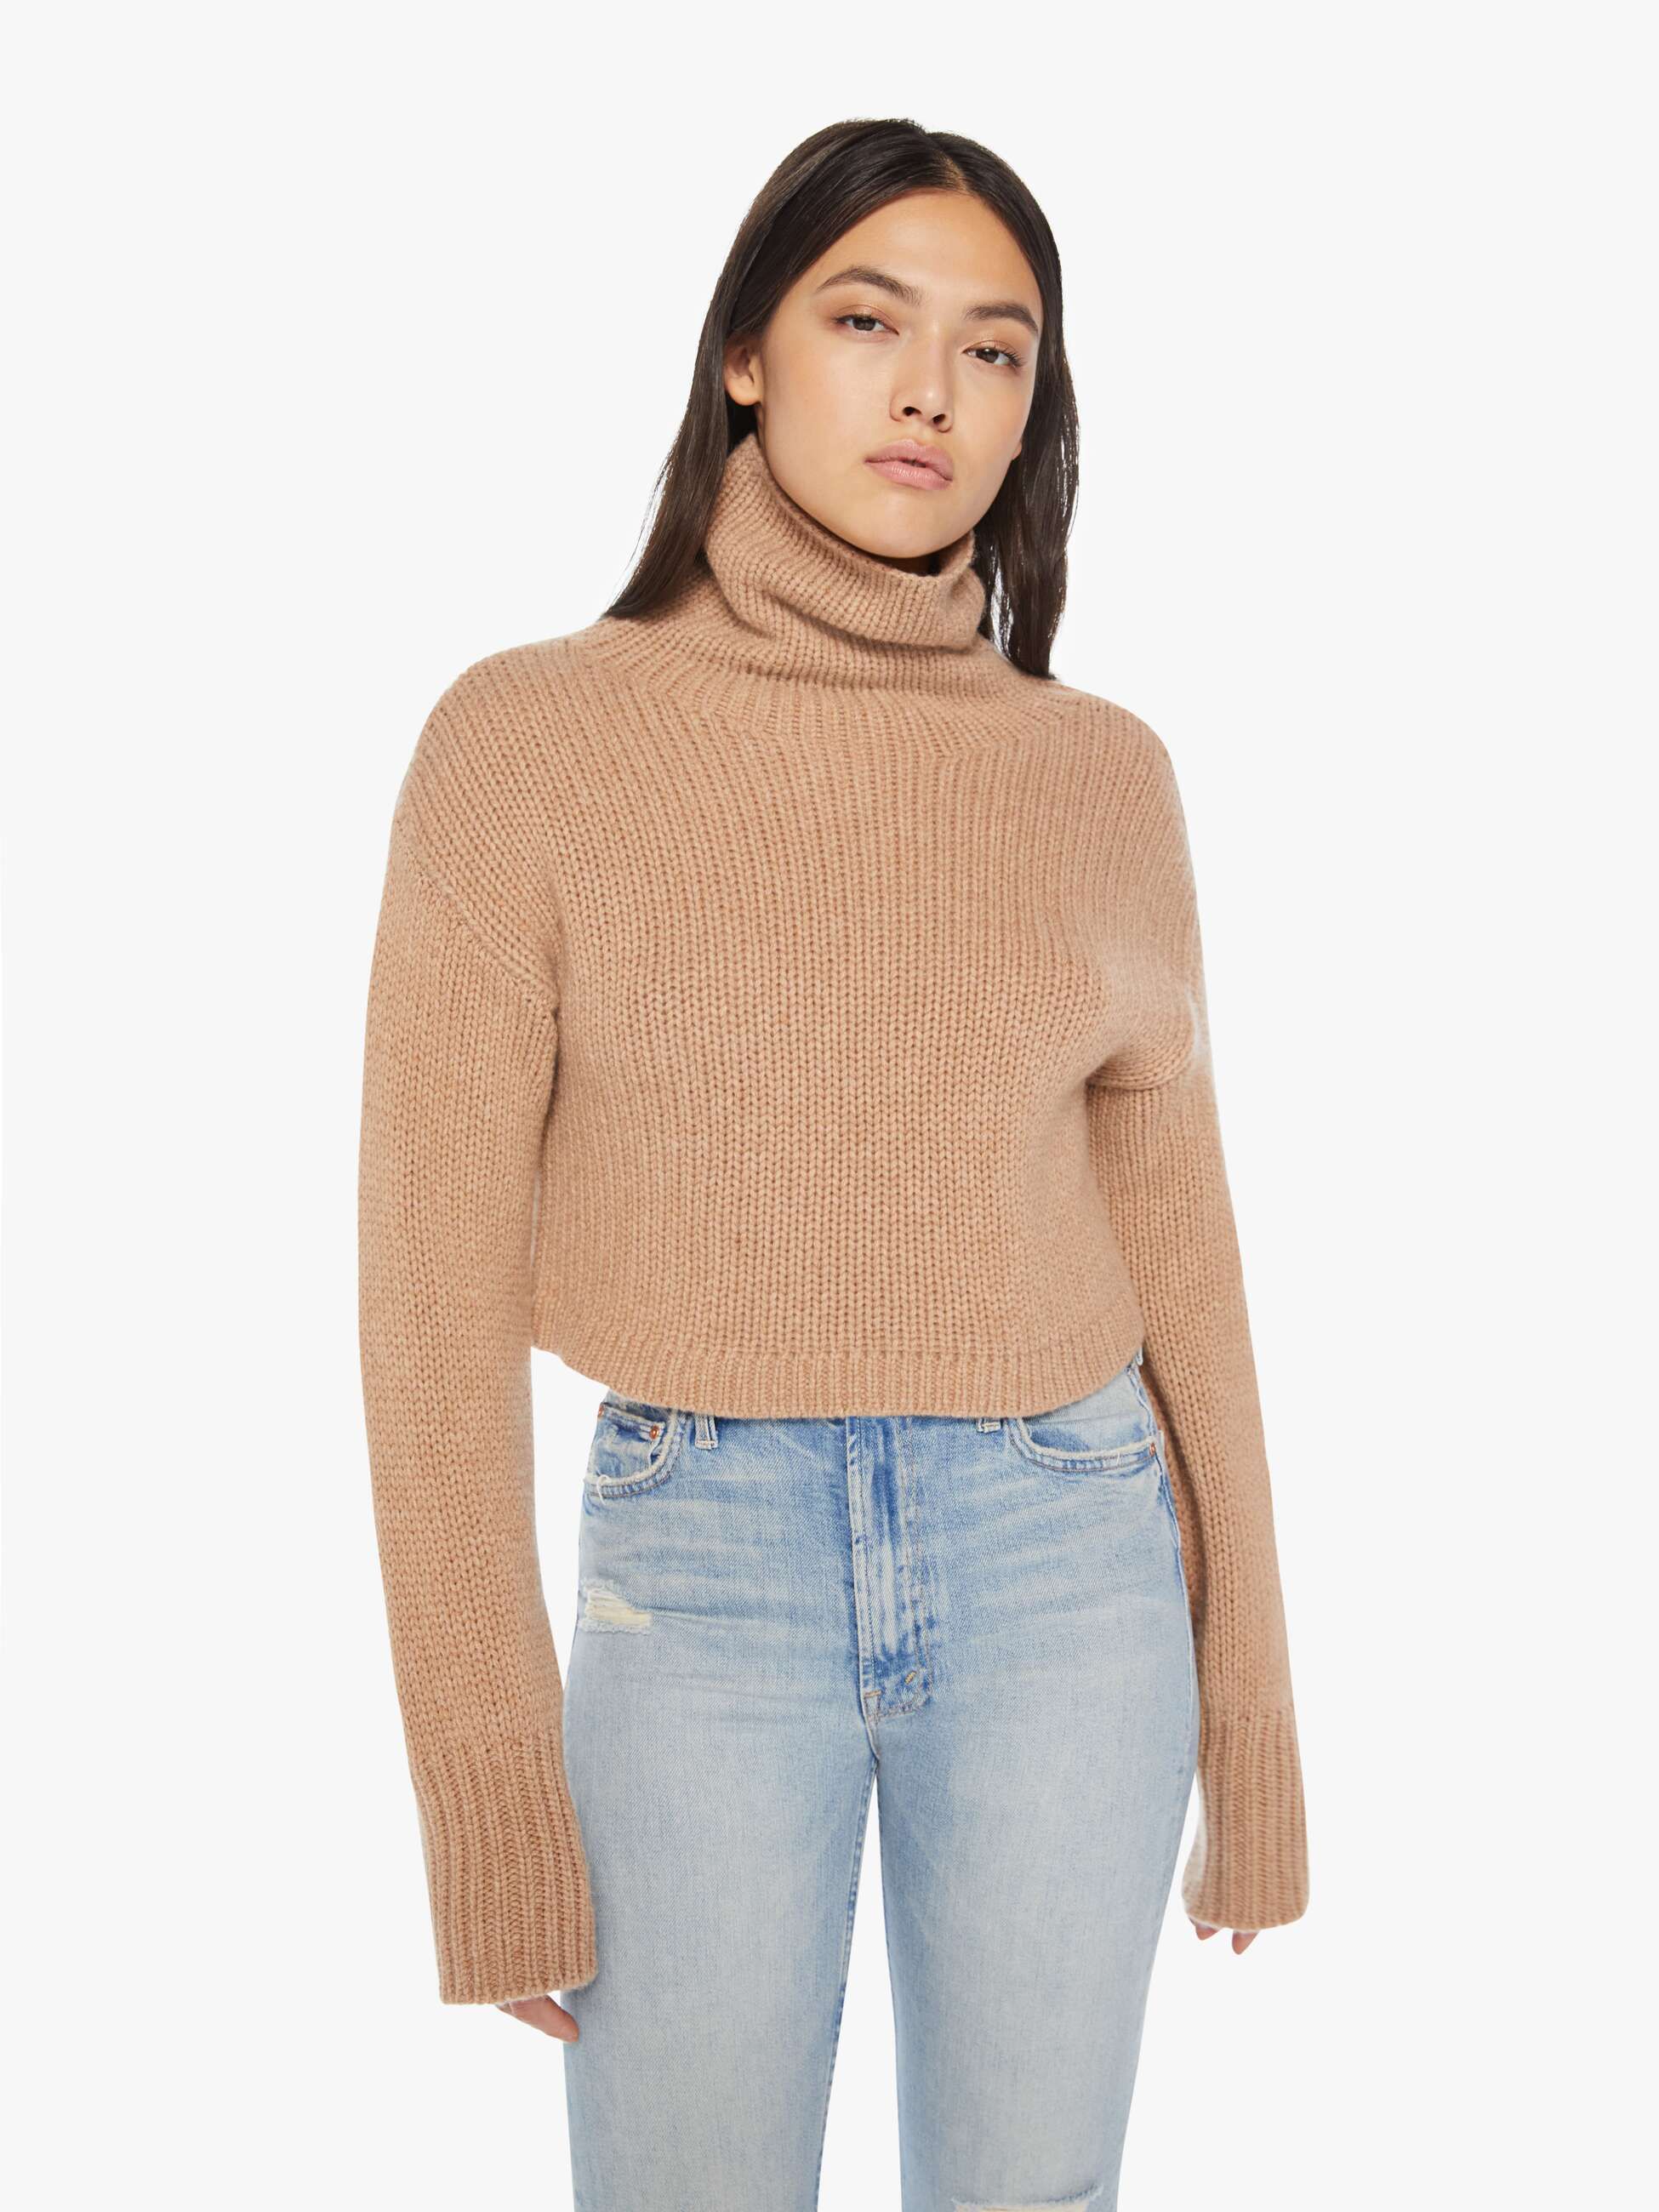 SABLYN Shay Crop Turtleneck Sweater - Almondine | Mother Denim